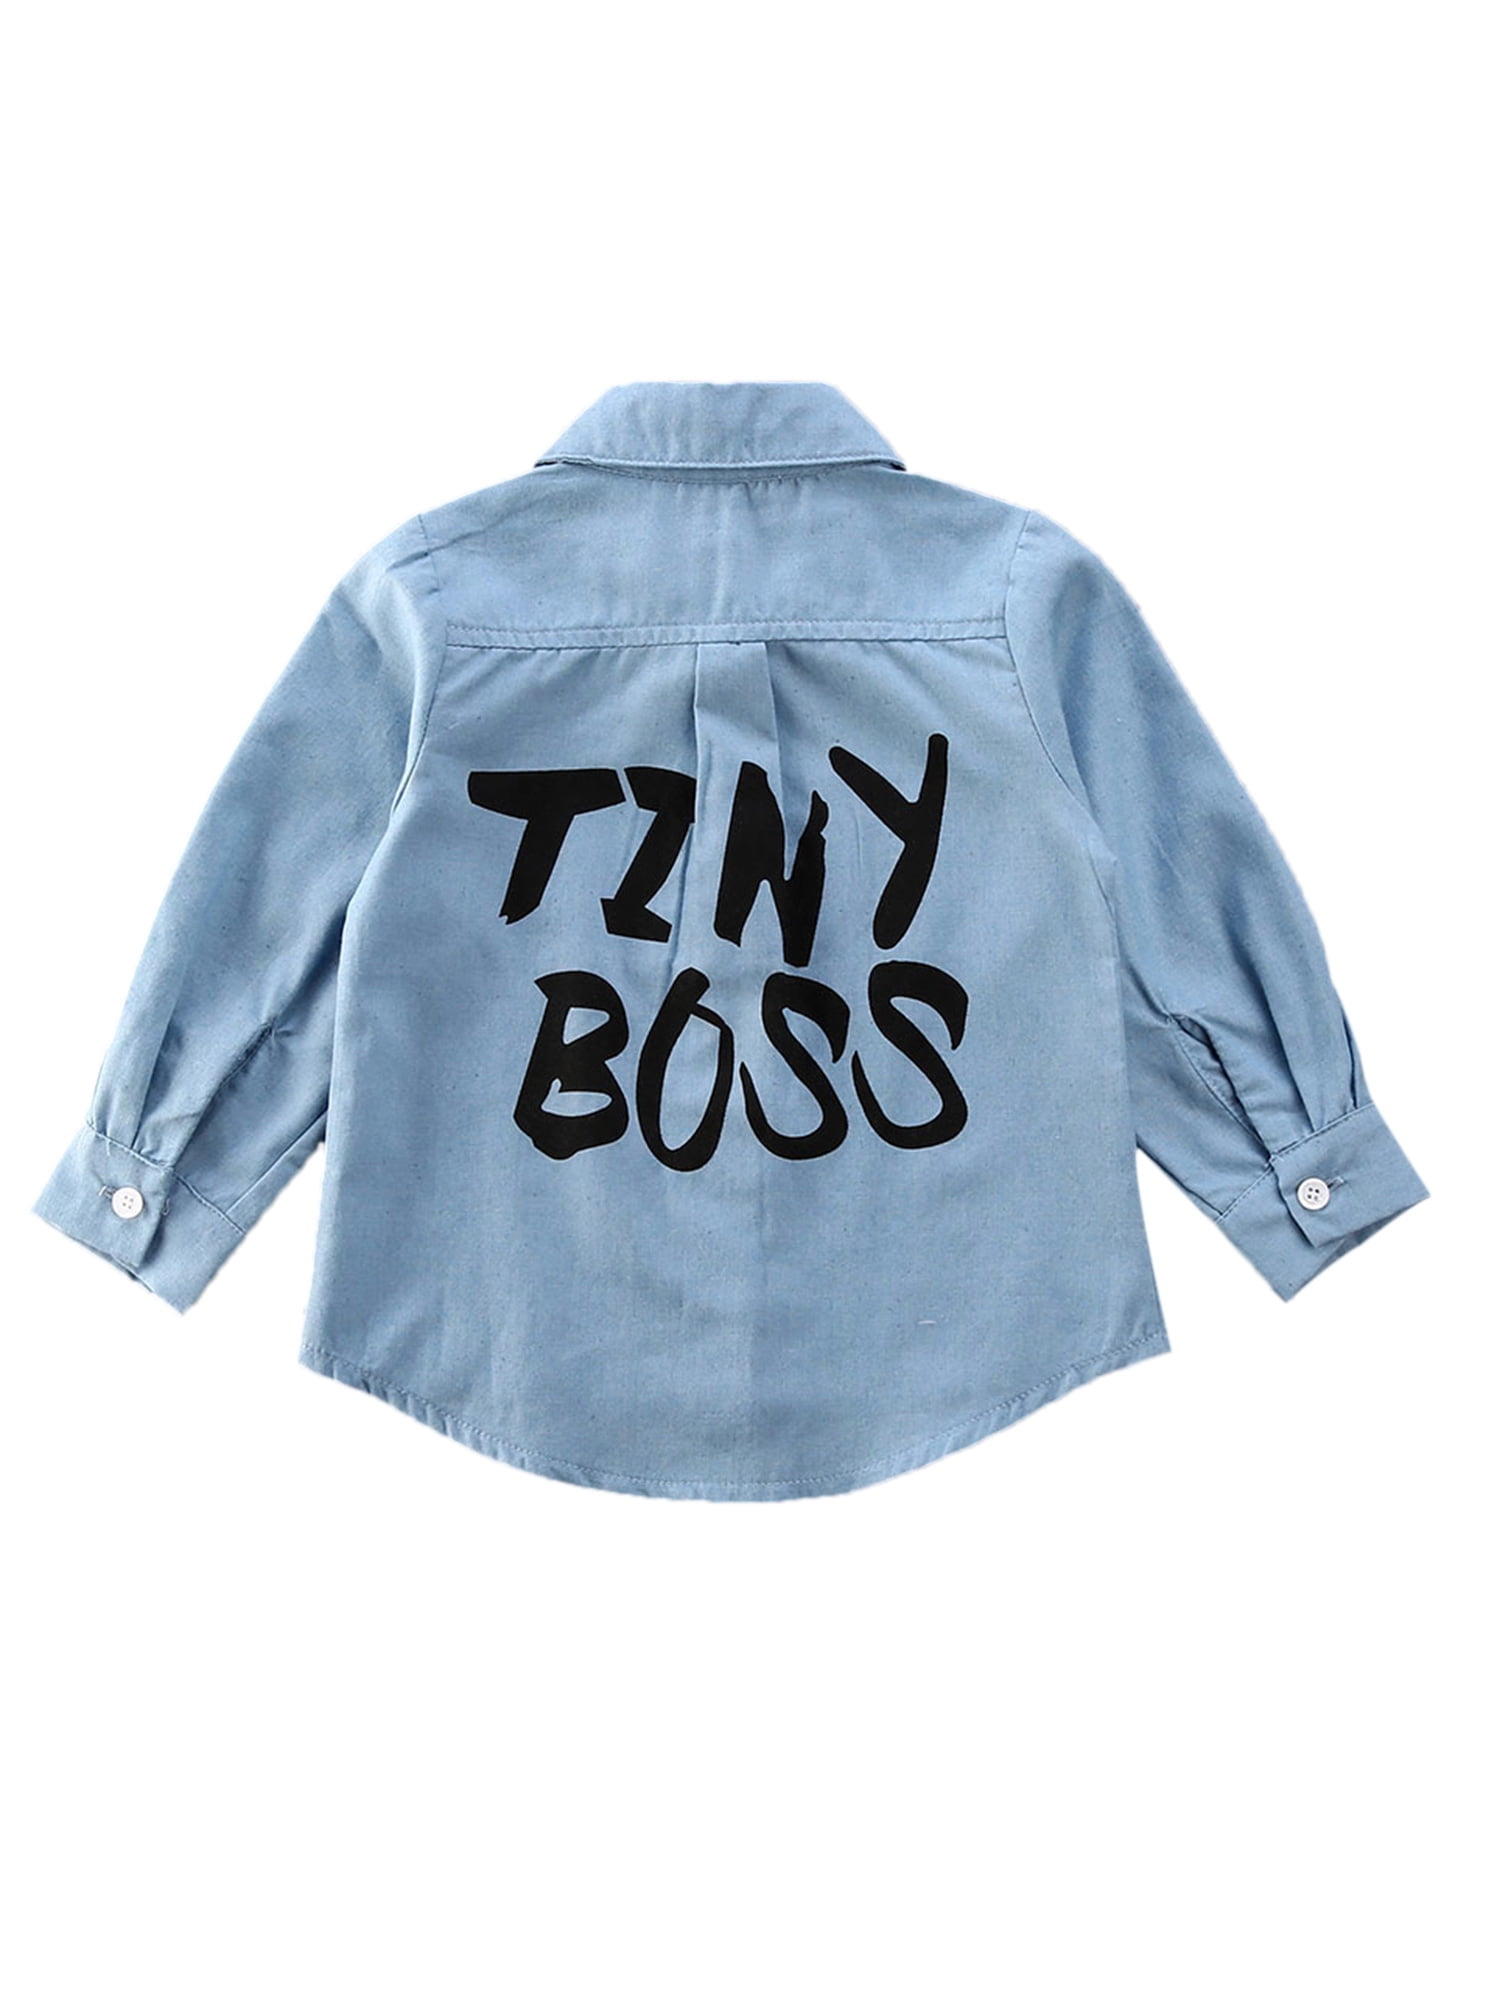 Toddler Little Boys Girls Baby Mini Boss Long Sleeve Button Down Flannel Denim Shirt Blouse Coat